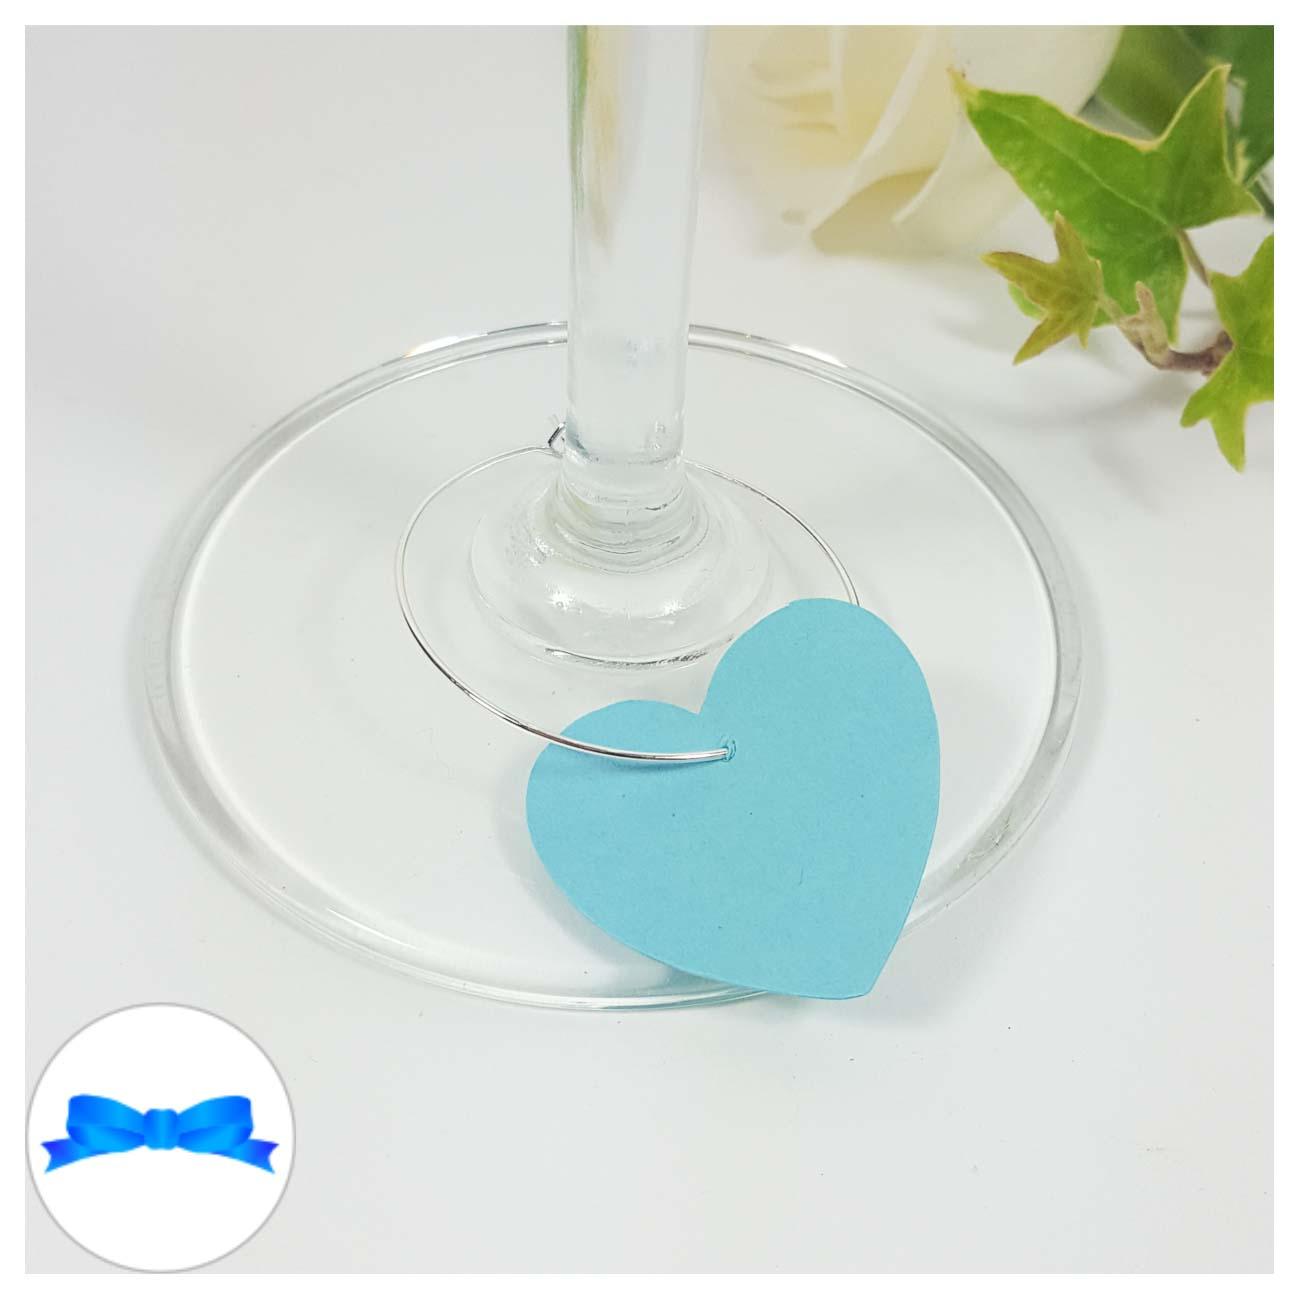 Turquoise heart shaped wine glass charm